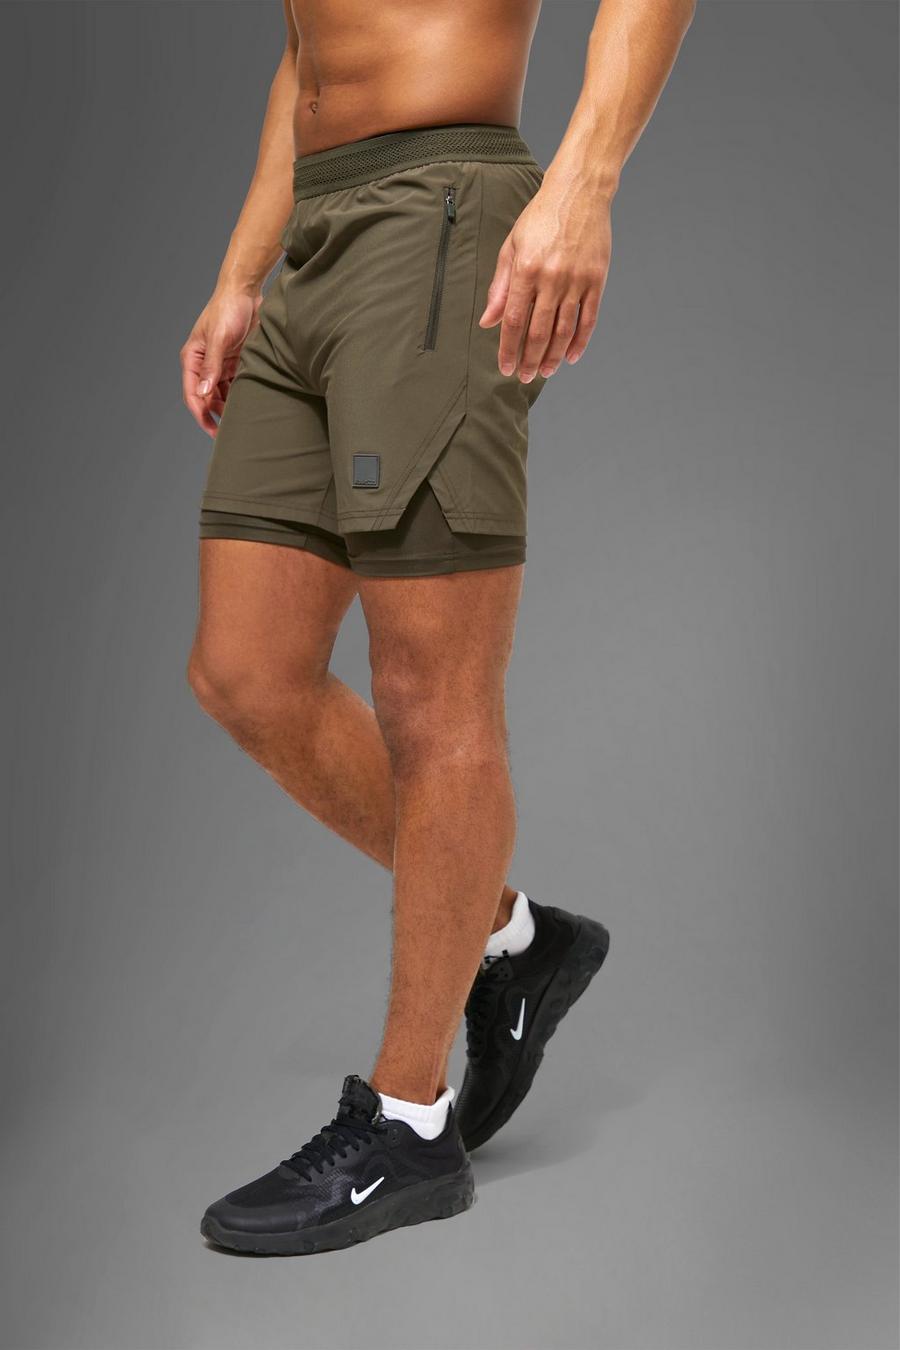 Pantalón corto MAN Active resistente 2 en 1, Khaki caqui